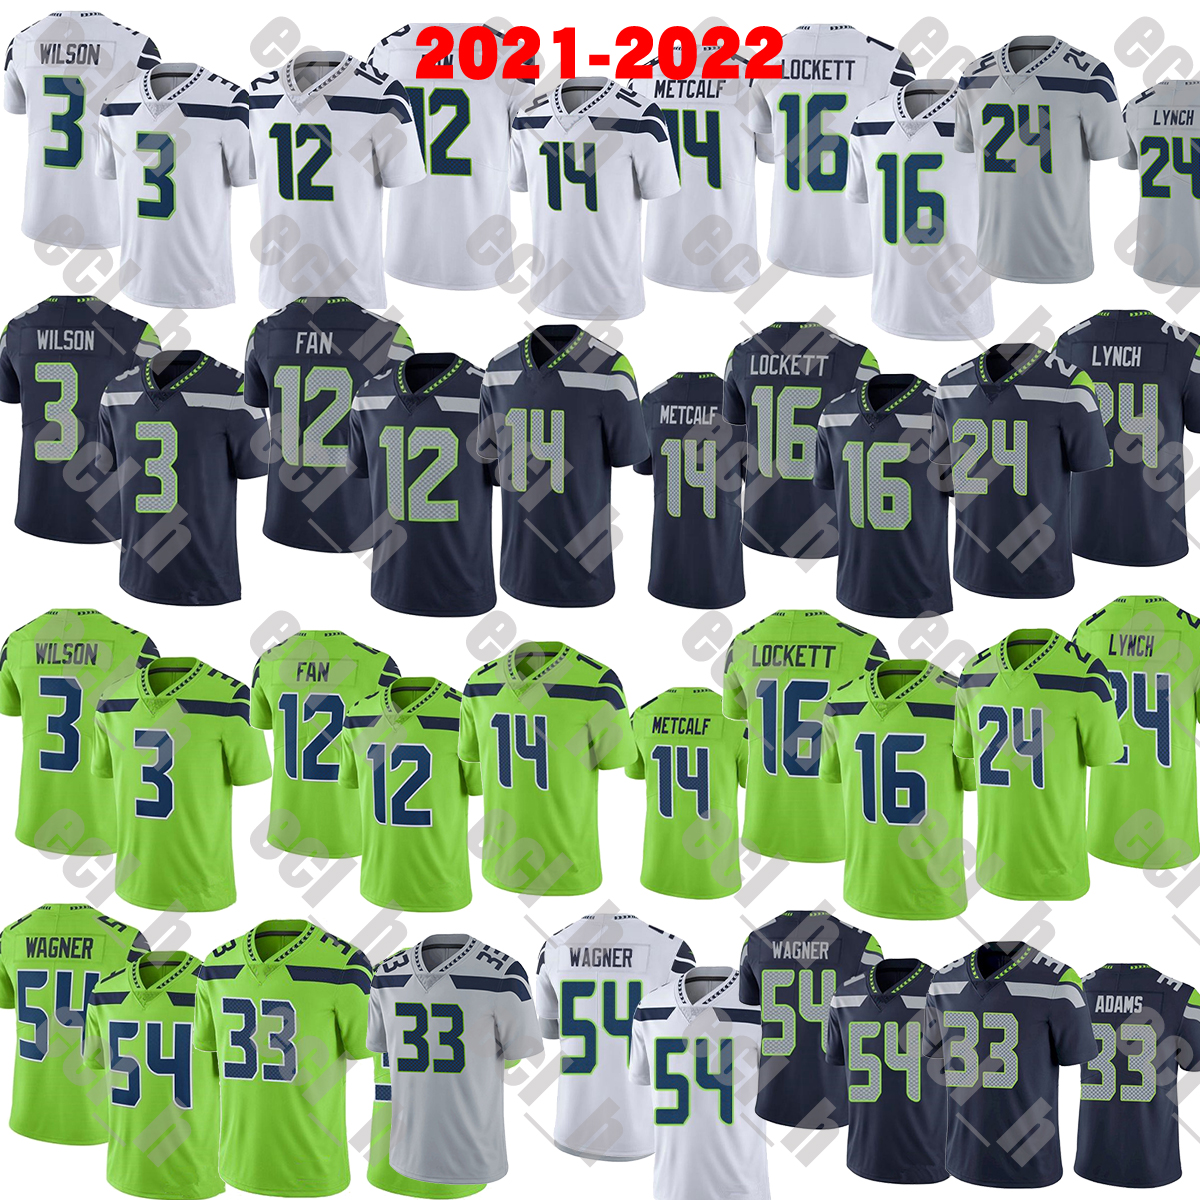 

2021-2022 High quality Stitched Football jerseys 3 Russell Wilsonn 12 Fan 14 DK Metcalf 16 Tyler Lockett 24 Marshawn Lynch 33 Jamal Adams 54 Bobby Wagner, As